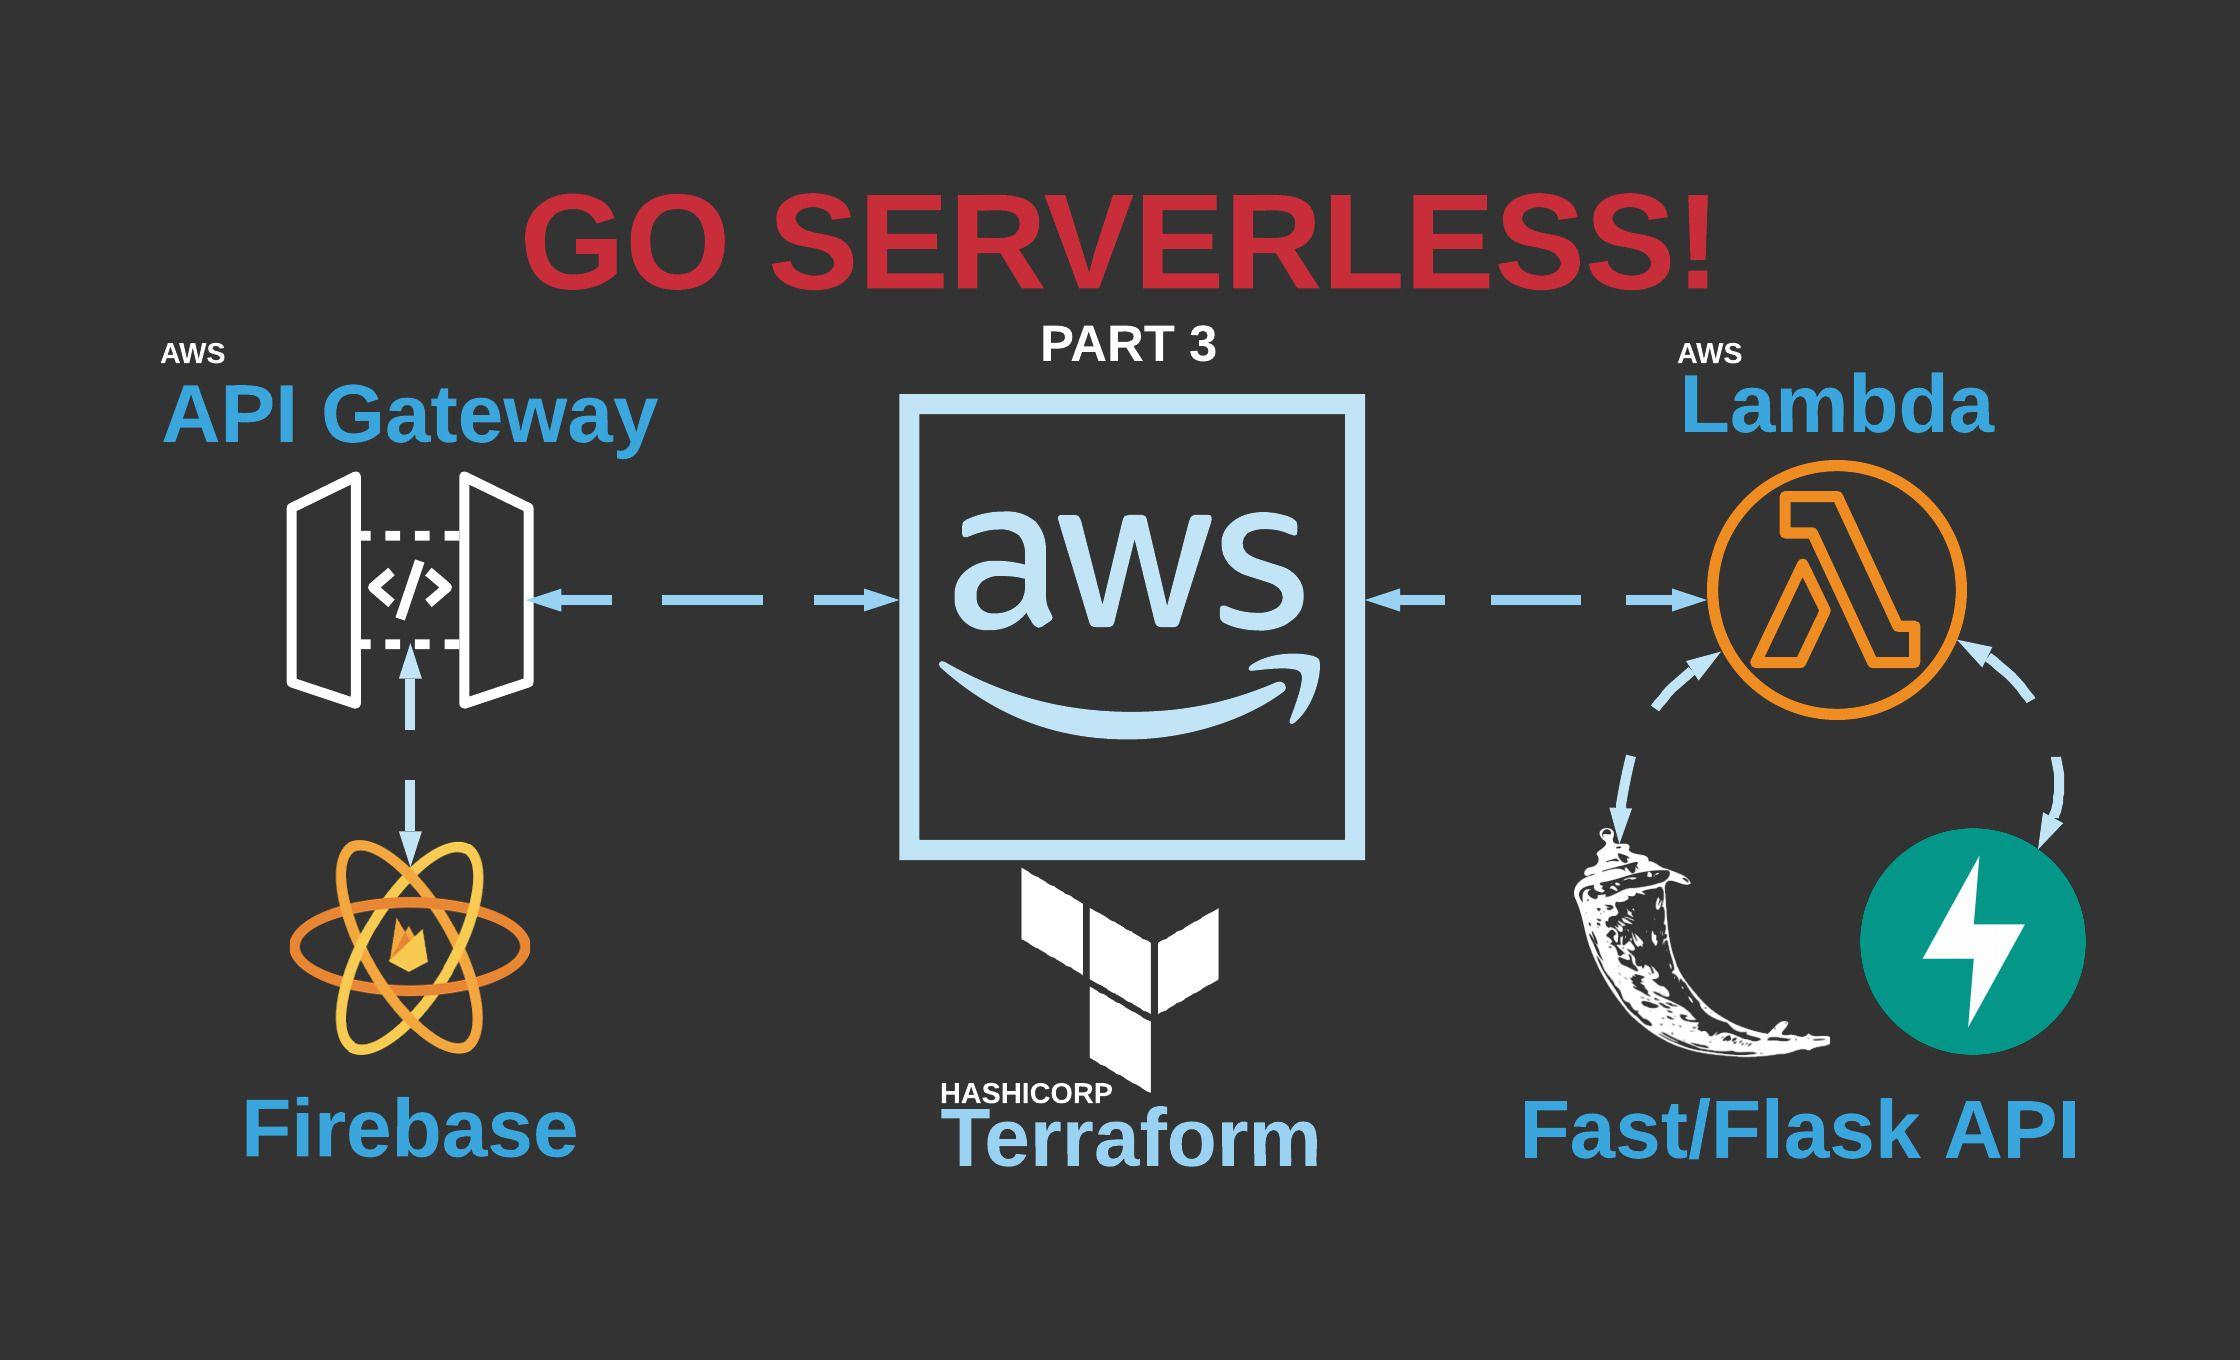 GO Serverless! Part 3 - Deploy HTTP API to AWS Lambda and Expose it via API Gateway